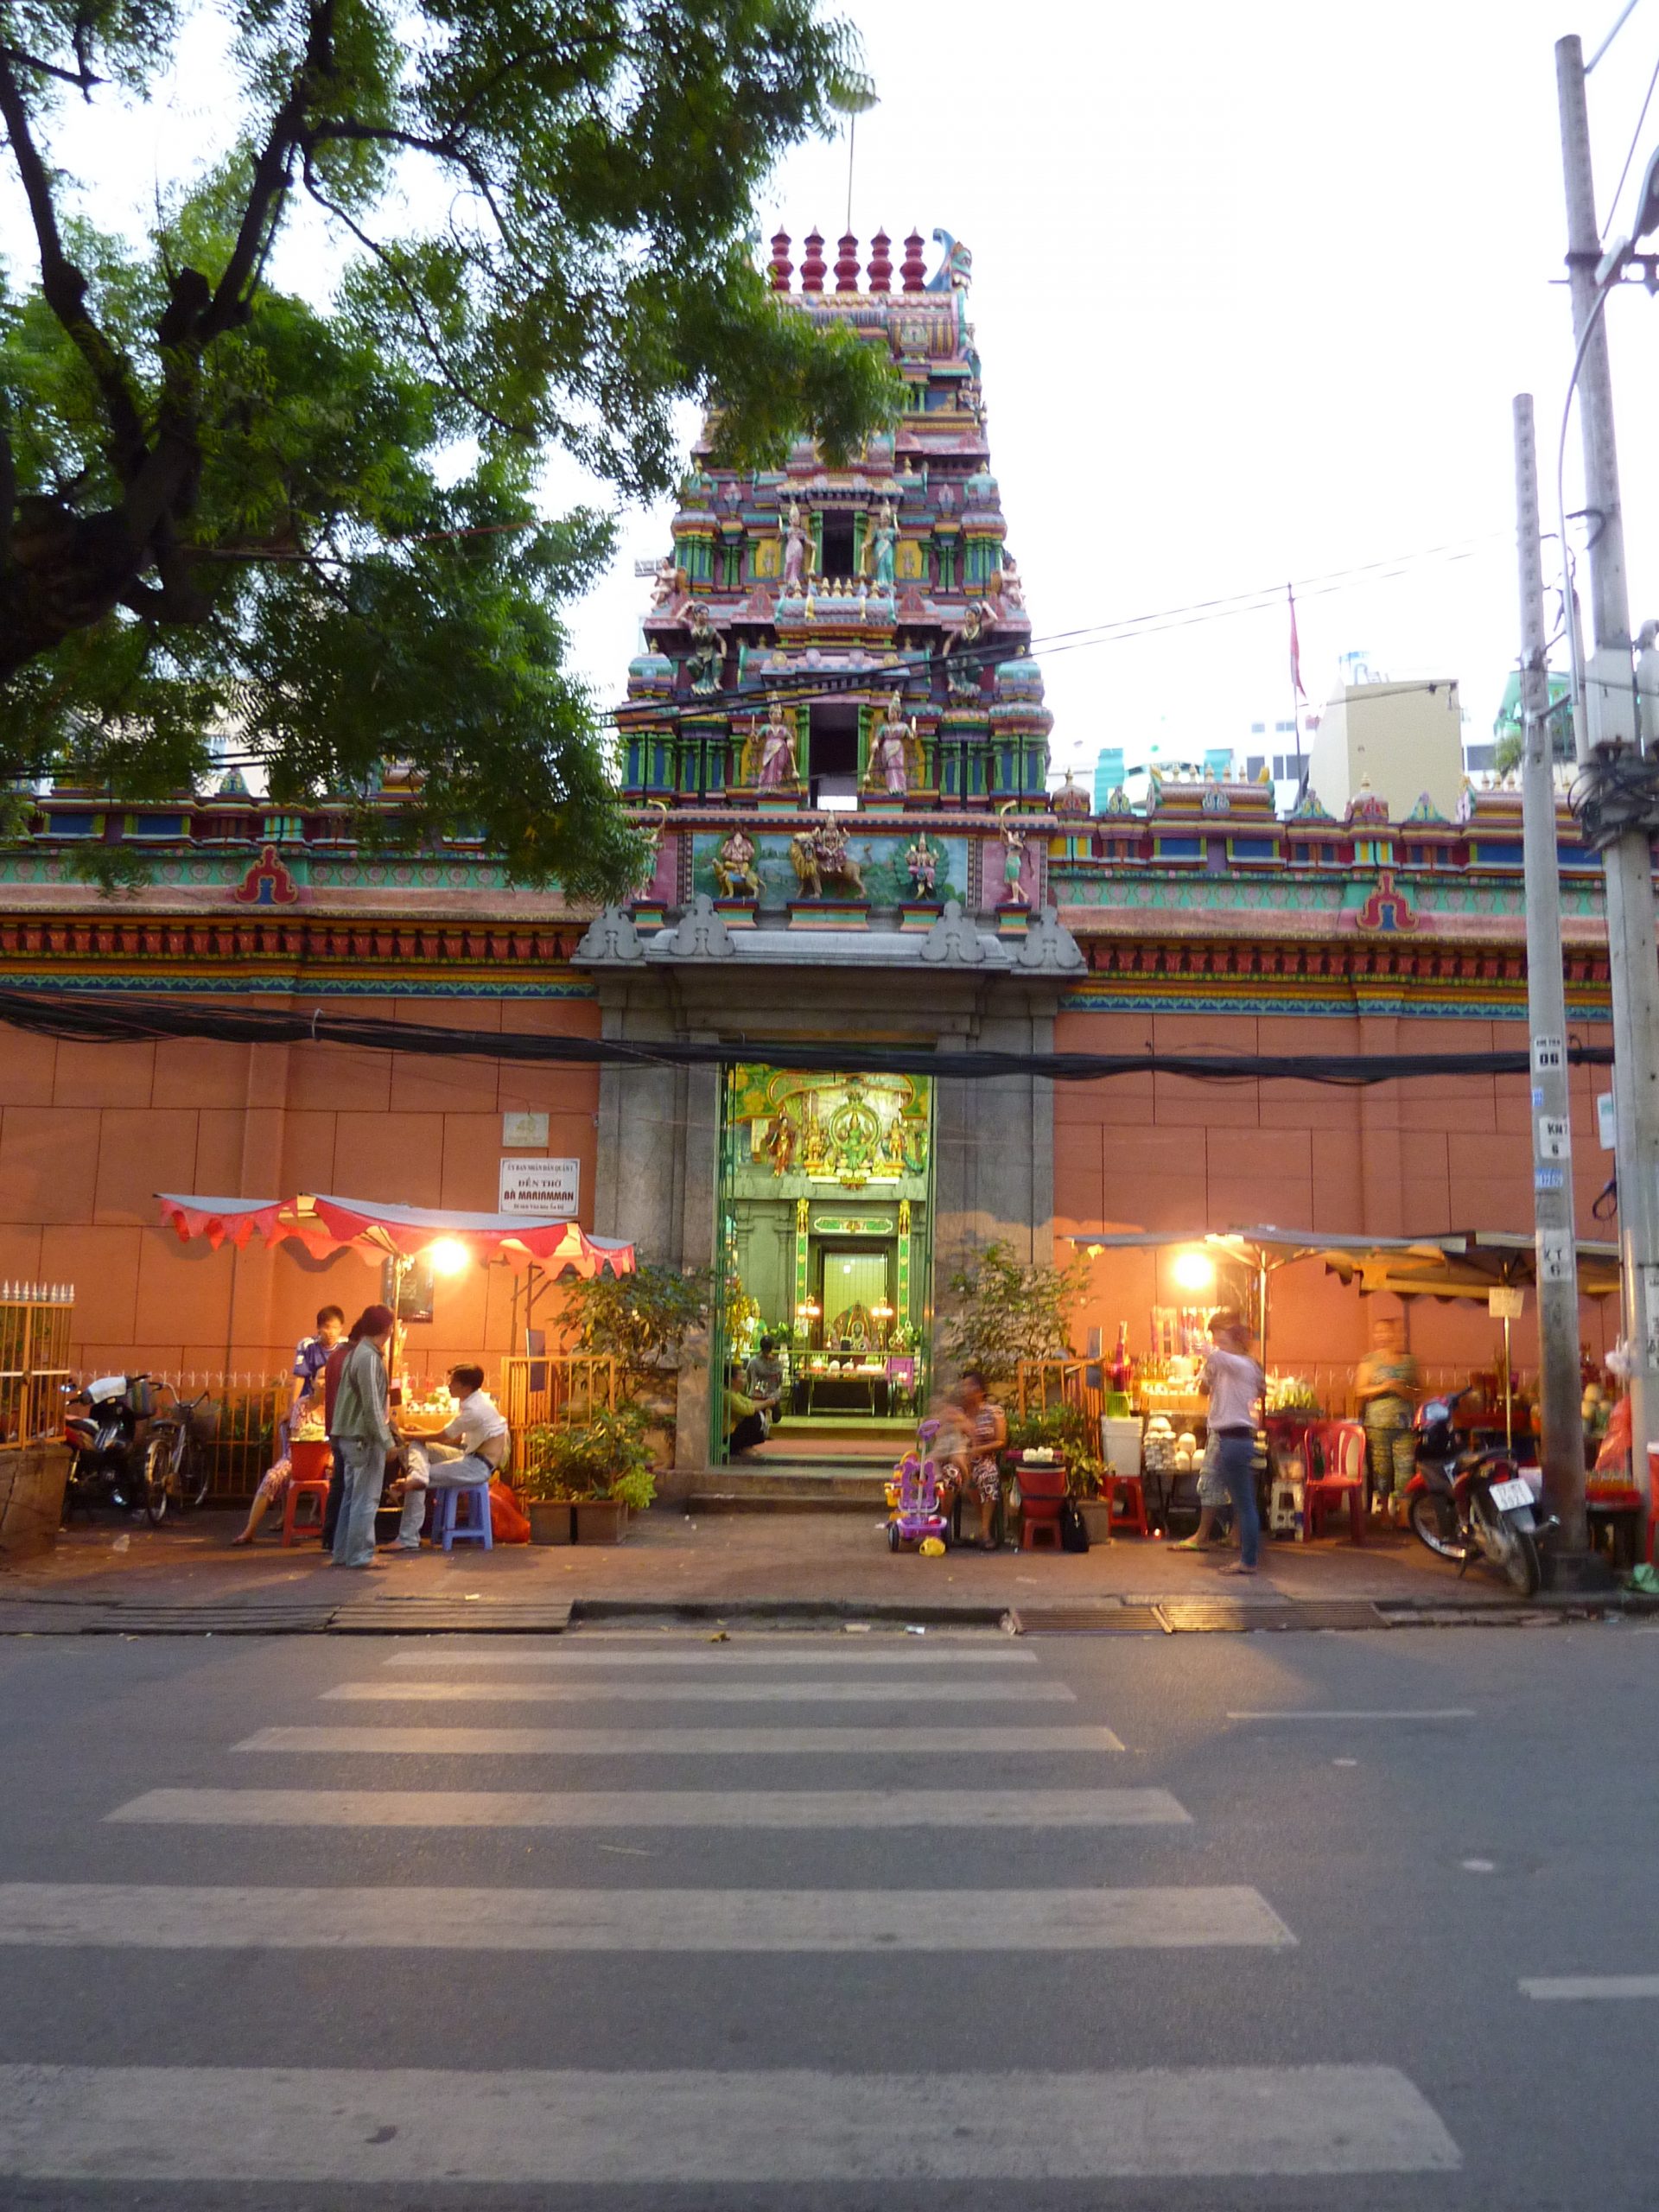 Sri Mariamman Temple, Ho Chi Minh City, Vietnam (Image by Amore Mio via Wikipedia)